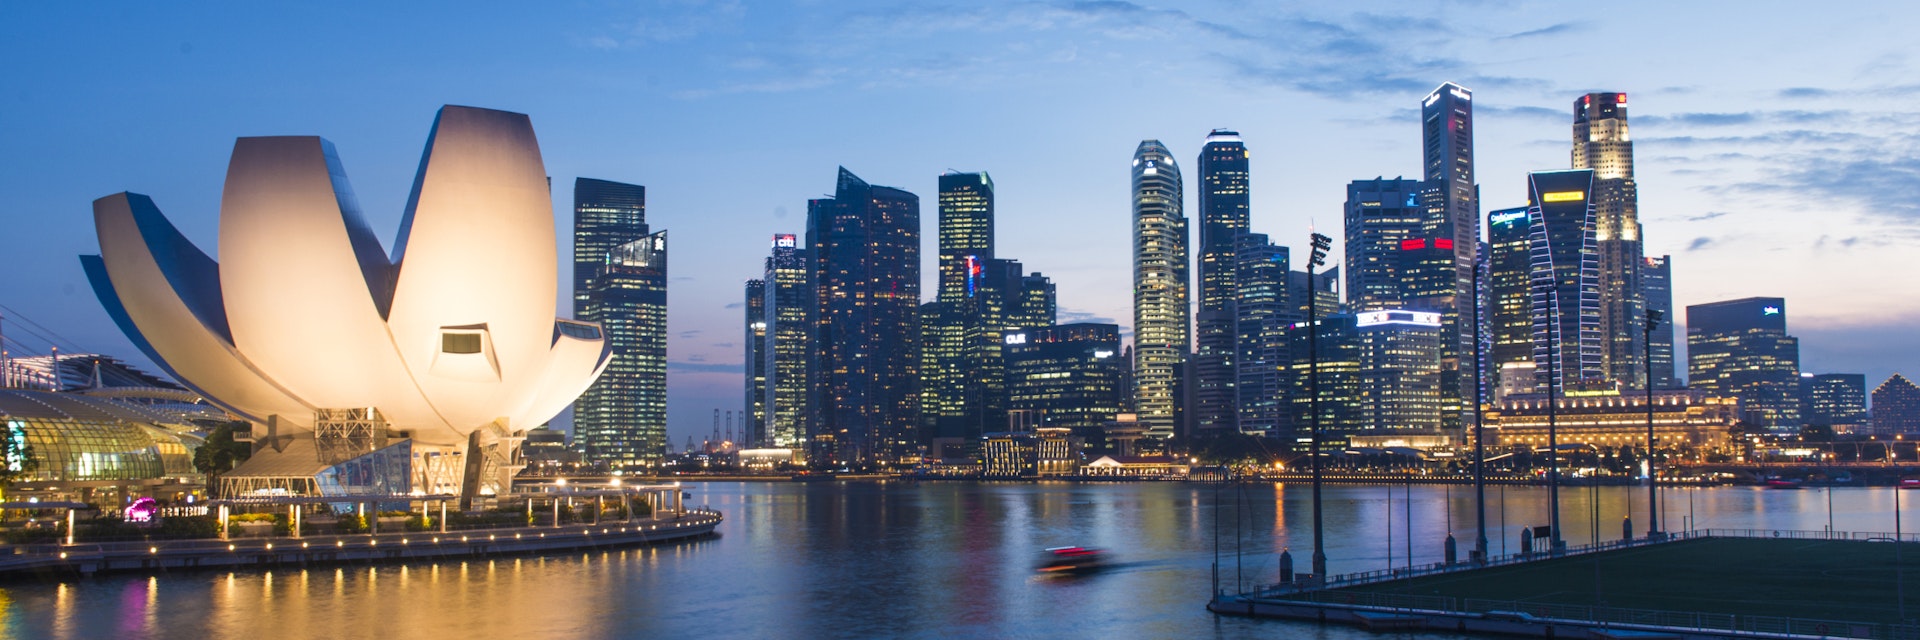 Twilight of Singapore City